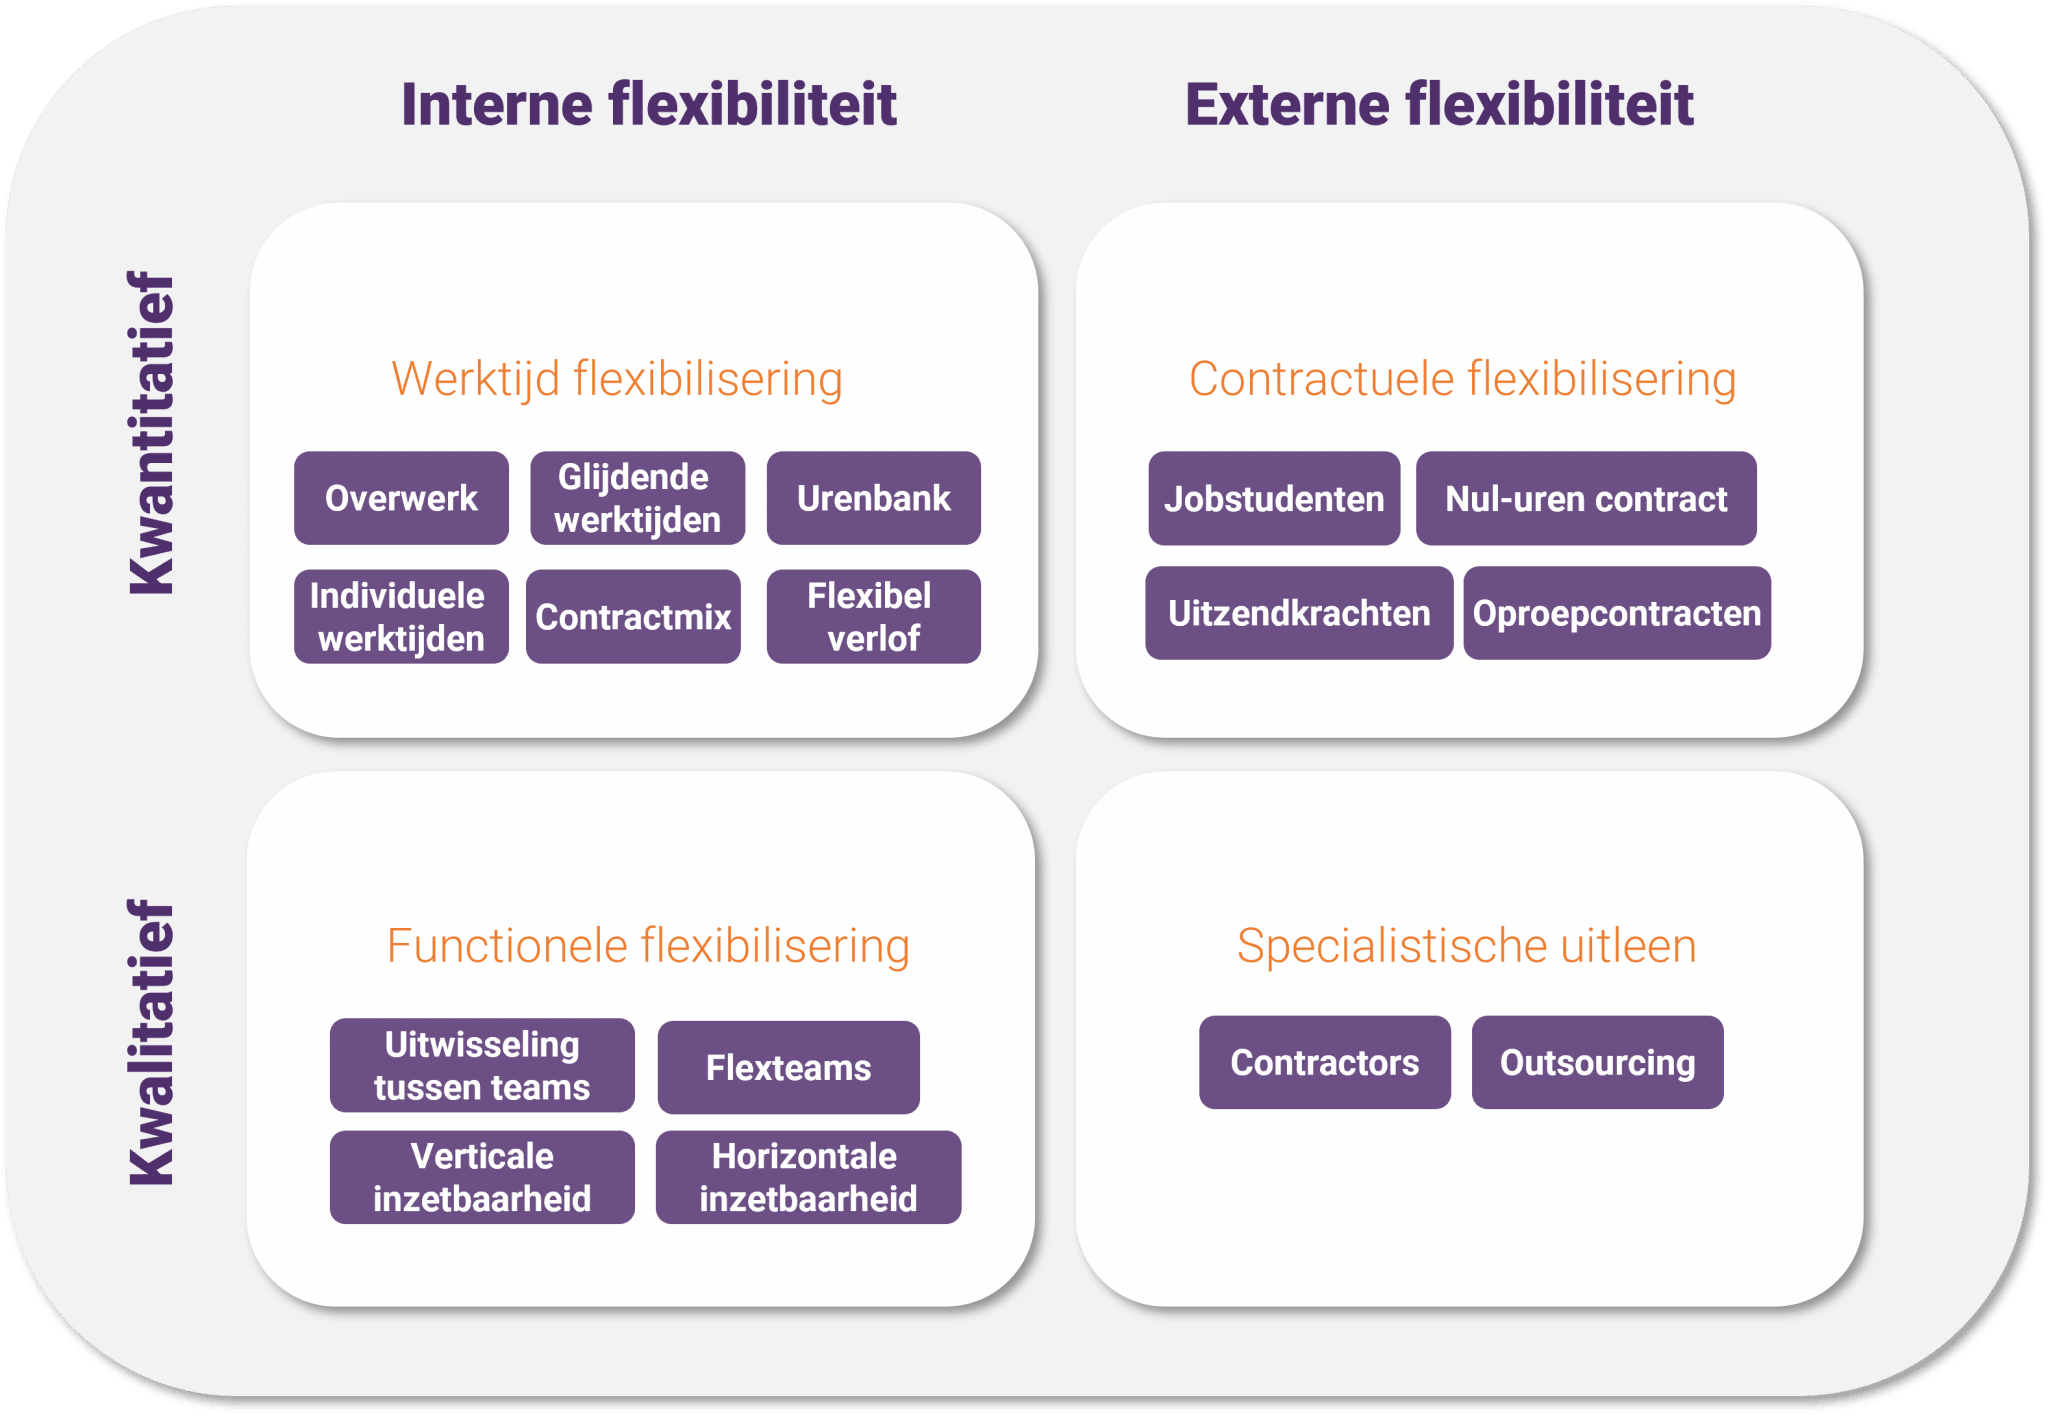 vormen van flexibilisering personeel kwadrant intern en extern